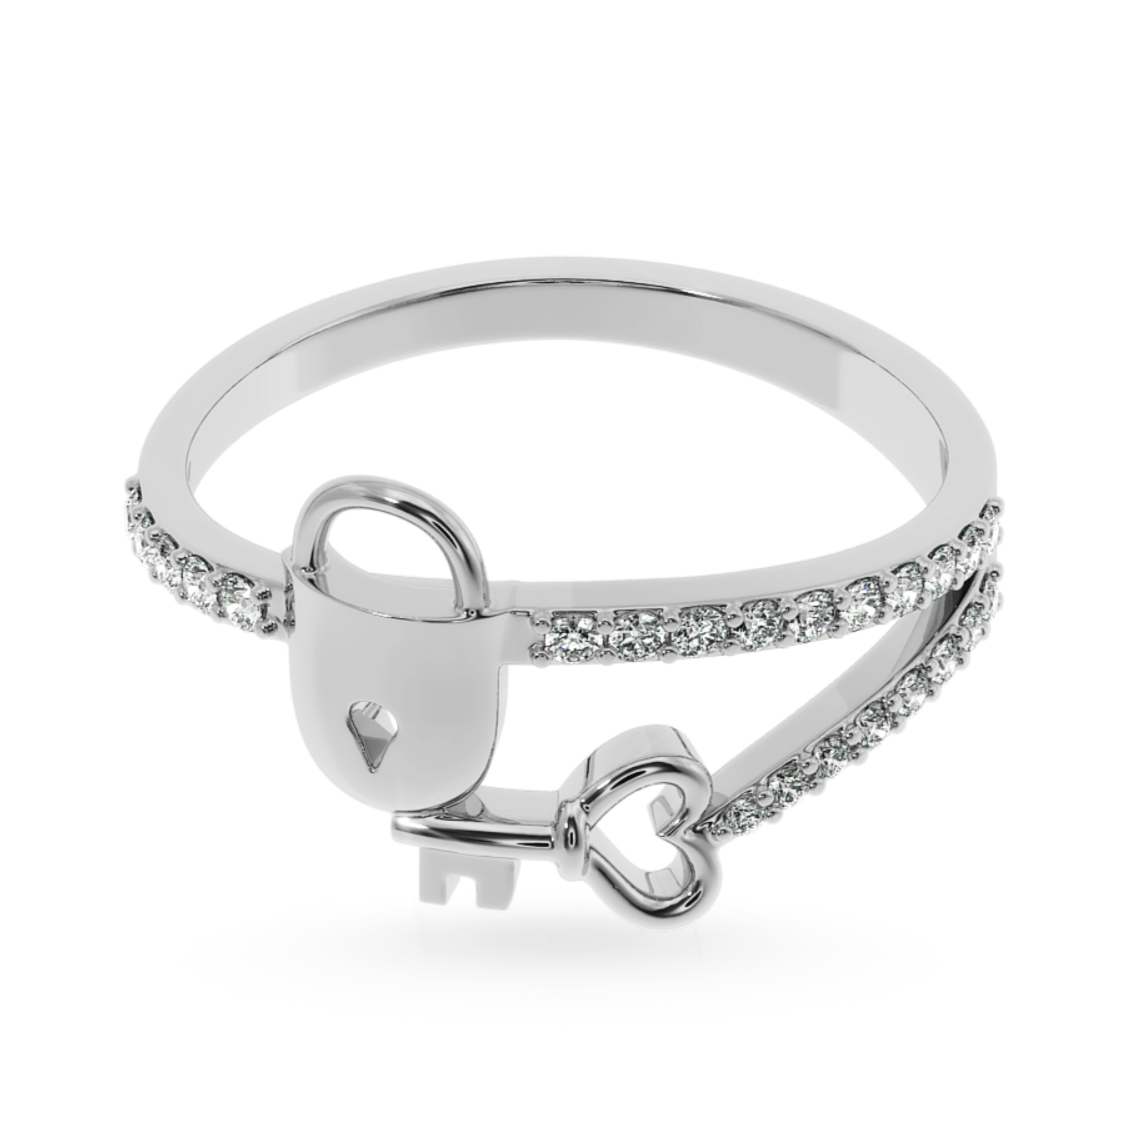 Copper Projection Key Chain Key Ring Accessories Key Ring Women | eBay